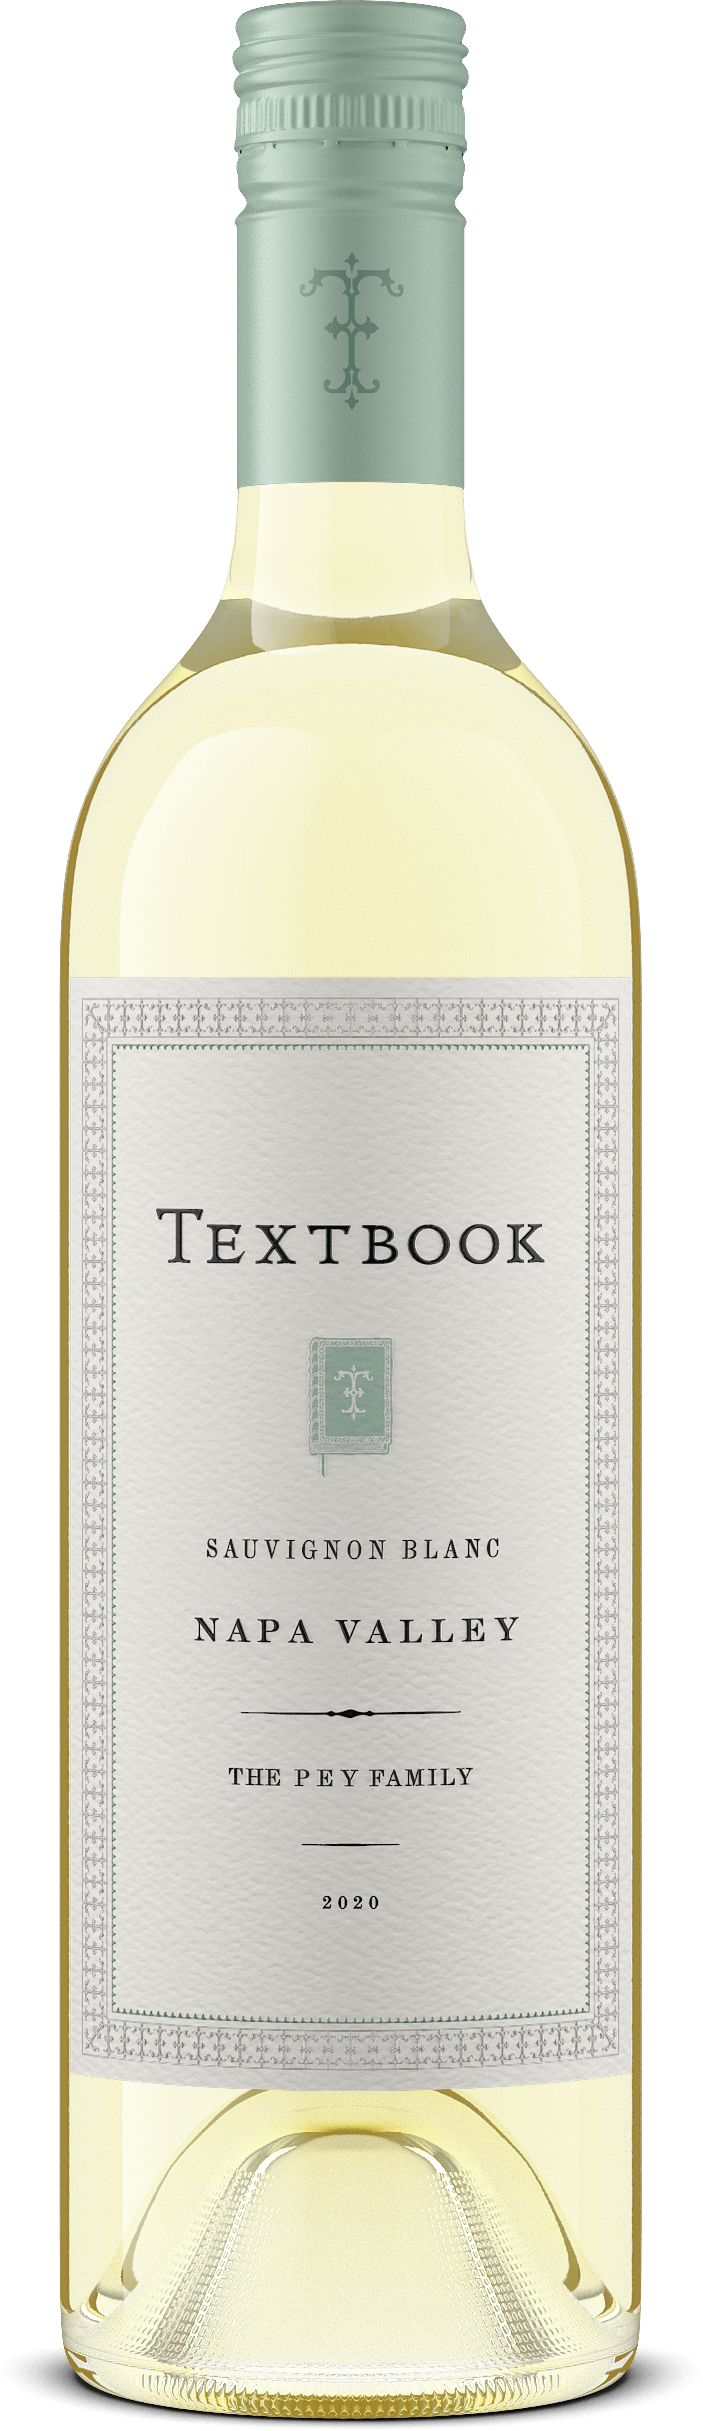 Textbook Sauvignon Blanc Napa Valley 2020